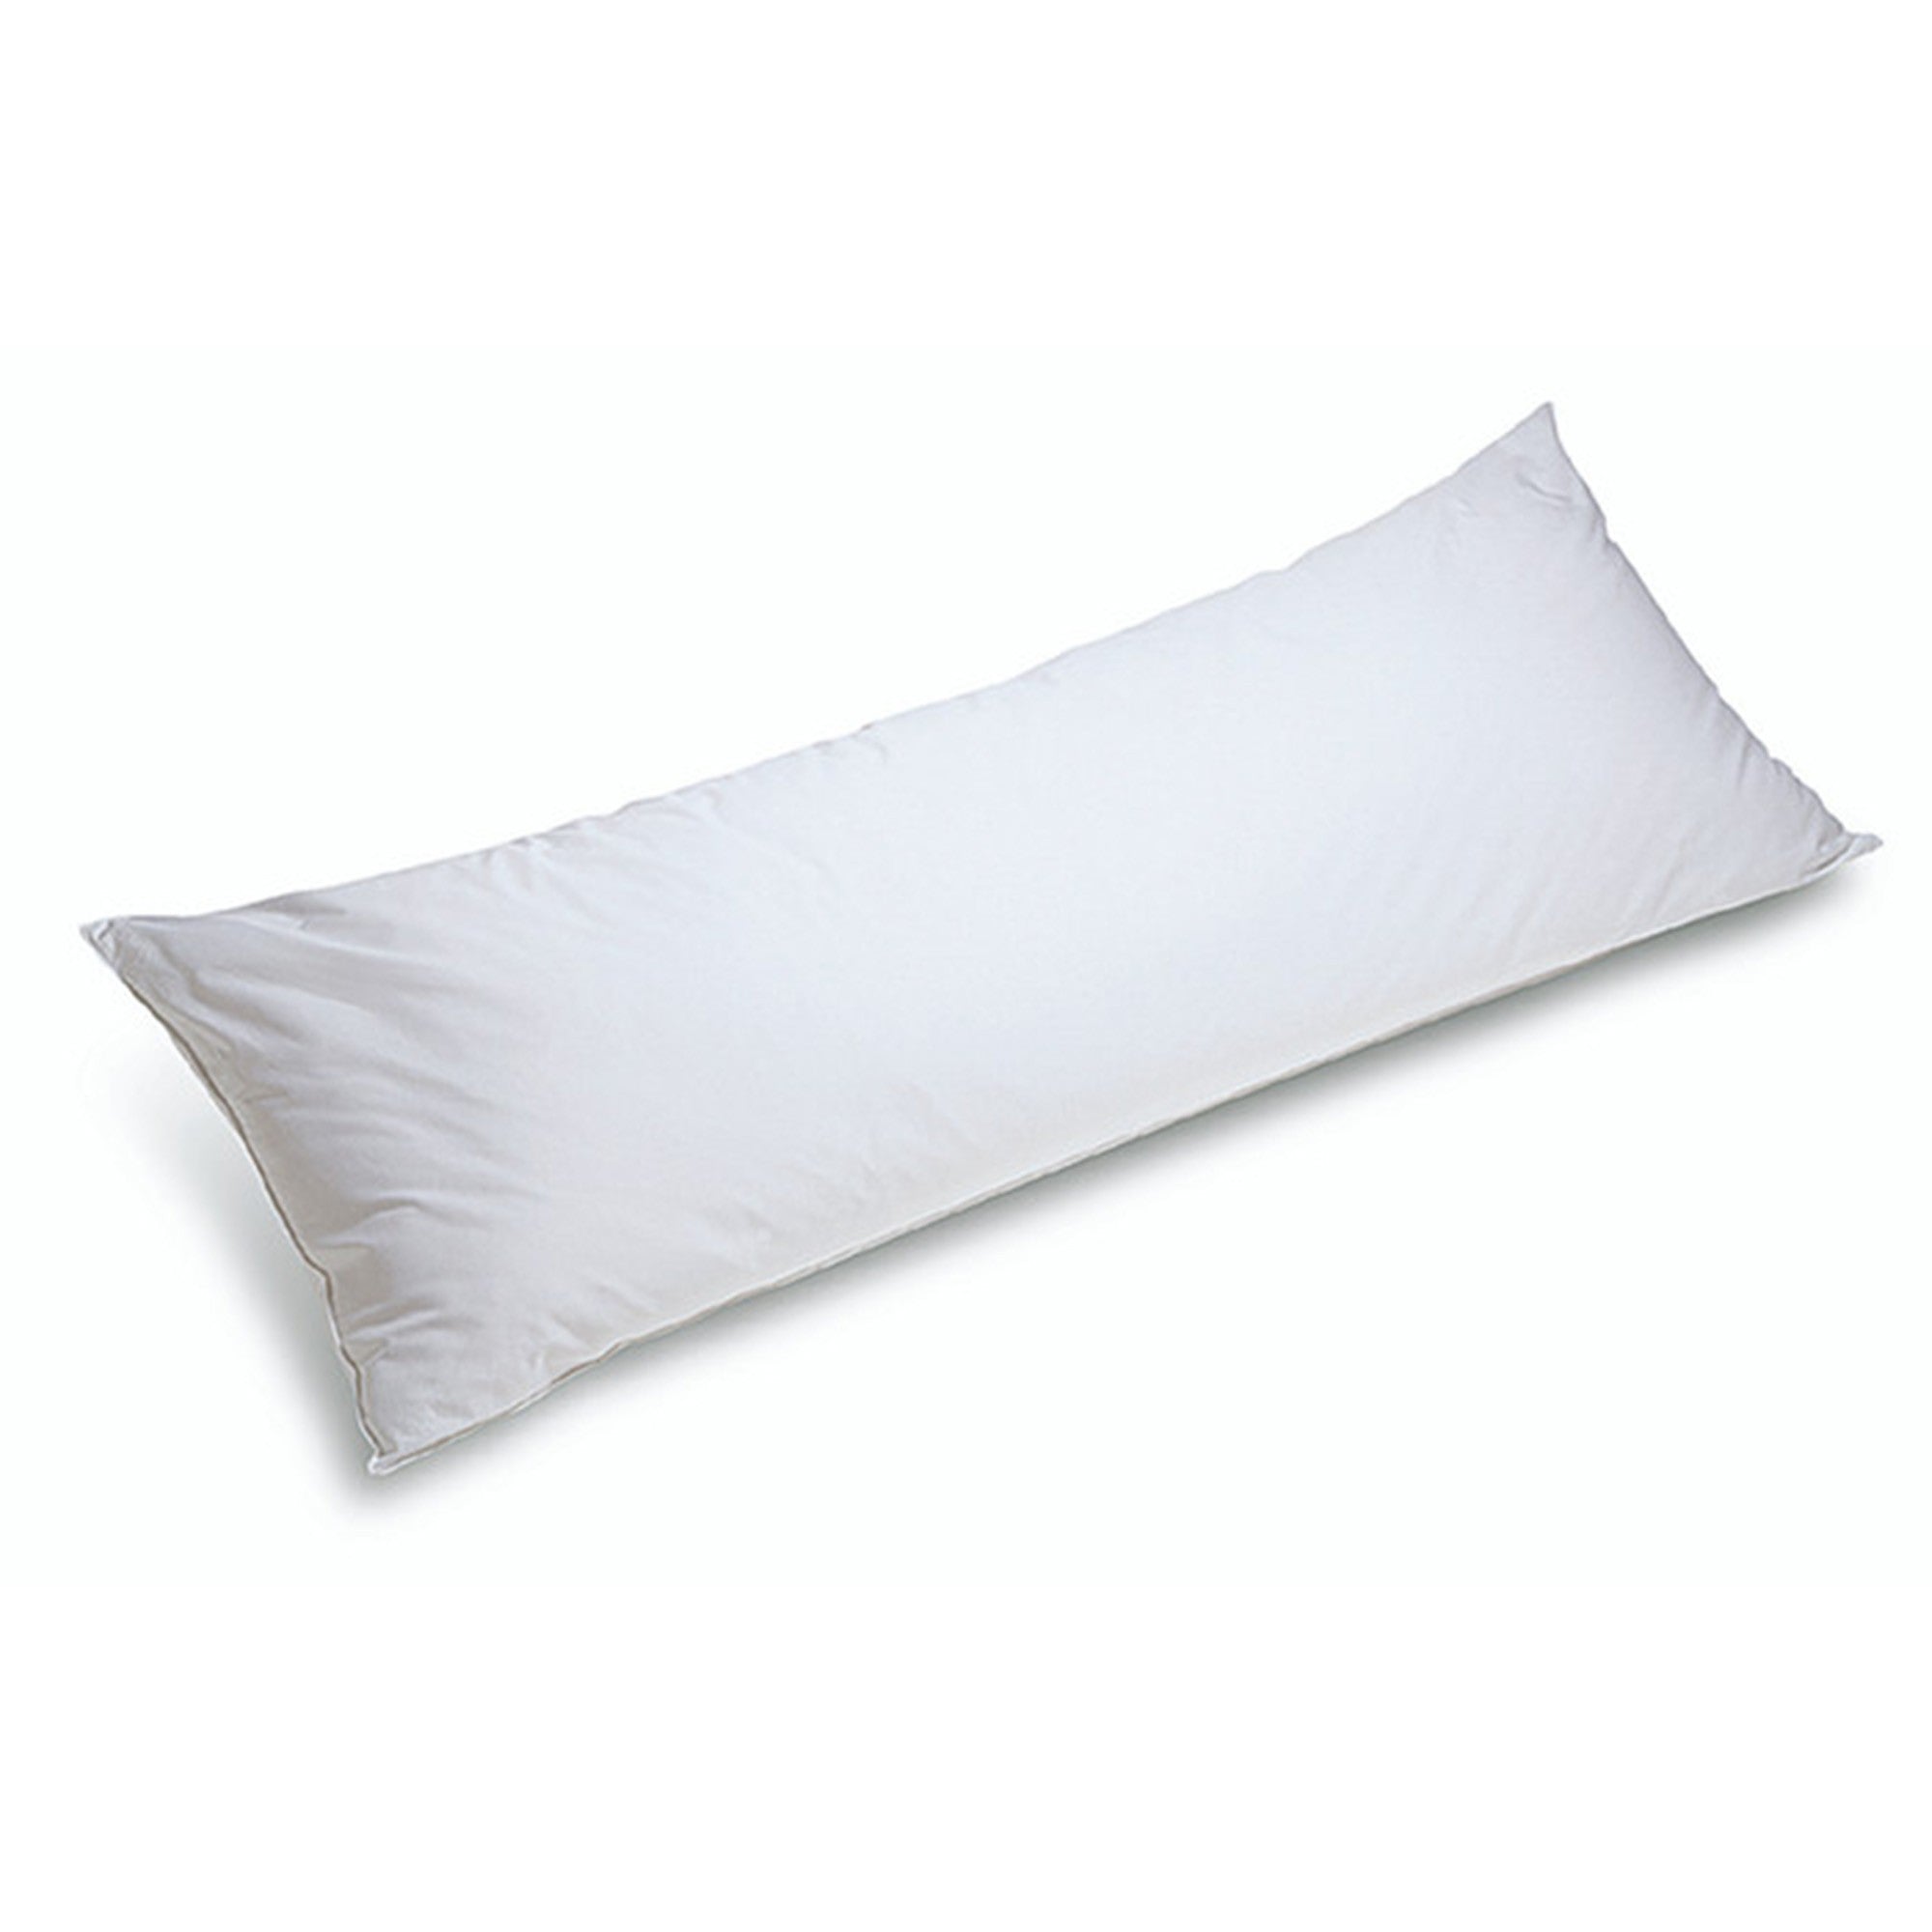 ObusForme Body Pillow - Fiber Filled - Medium Soft - 15-12355